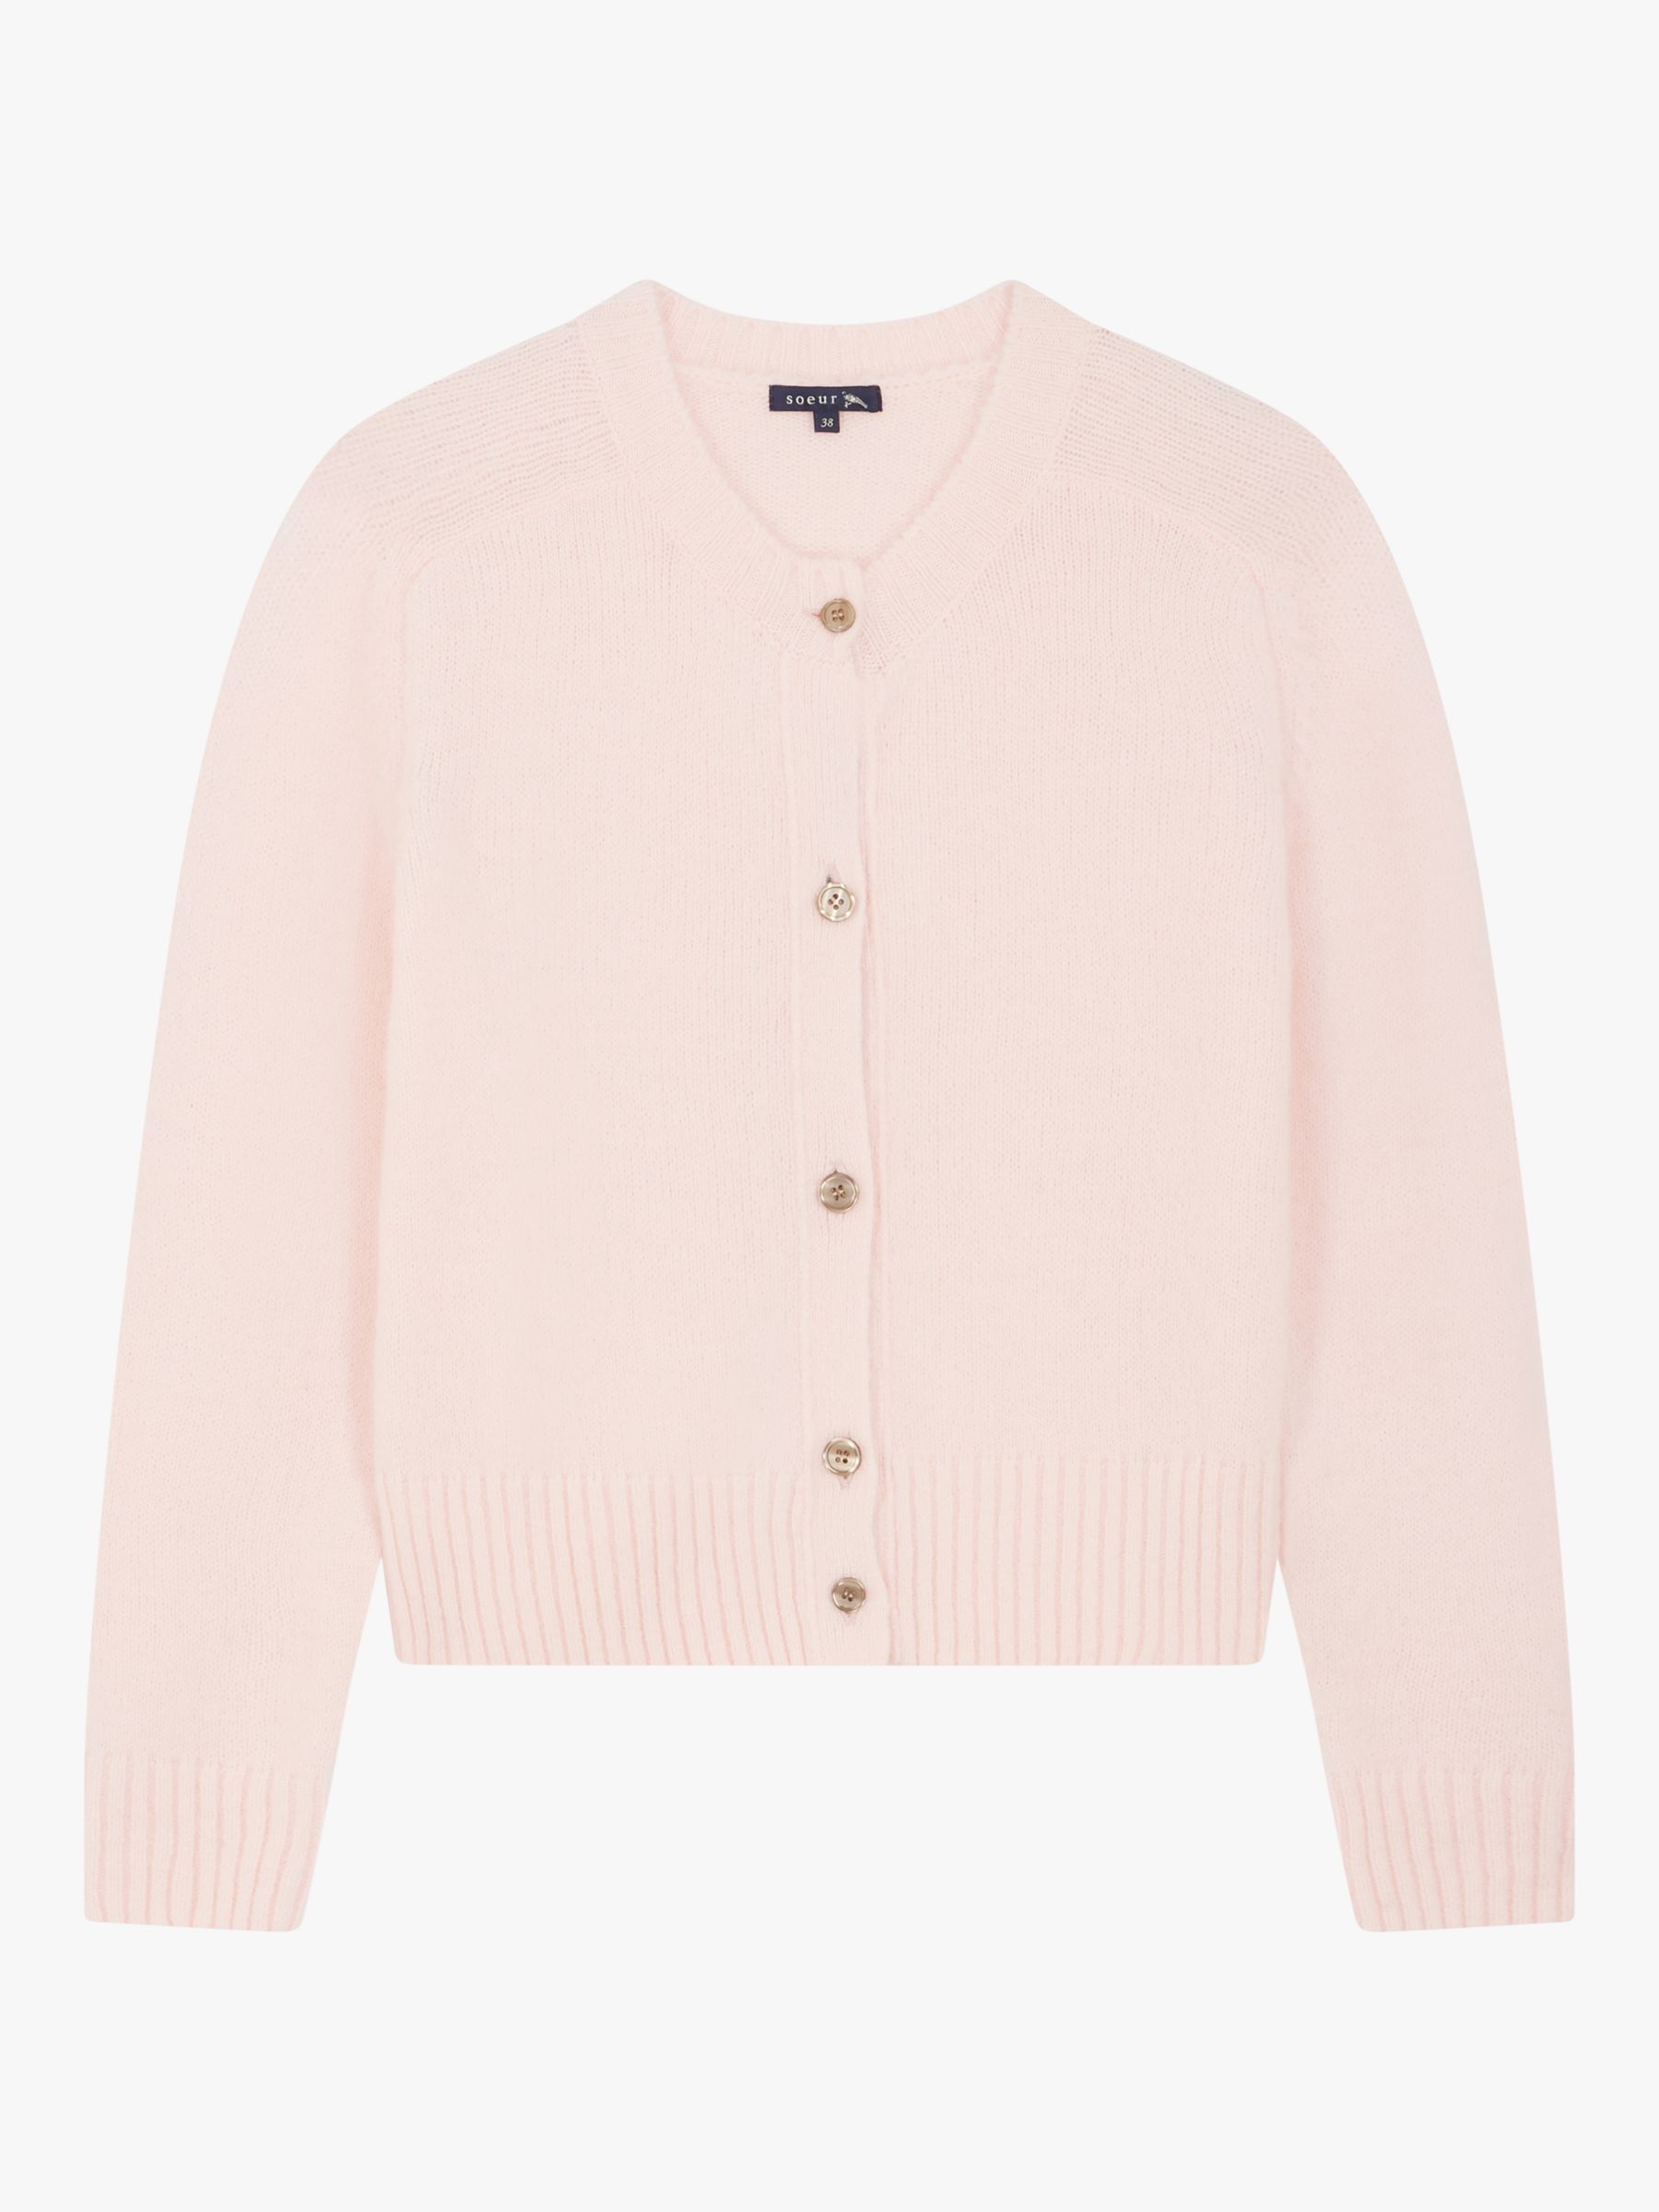 Soeur Lyne Shetland Knitted Cardigan, Pink at John Lewis & Partners